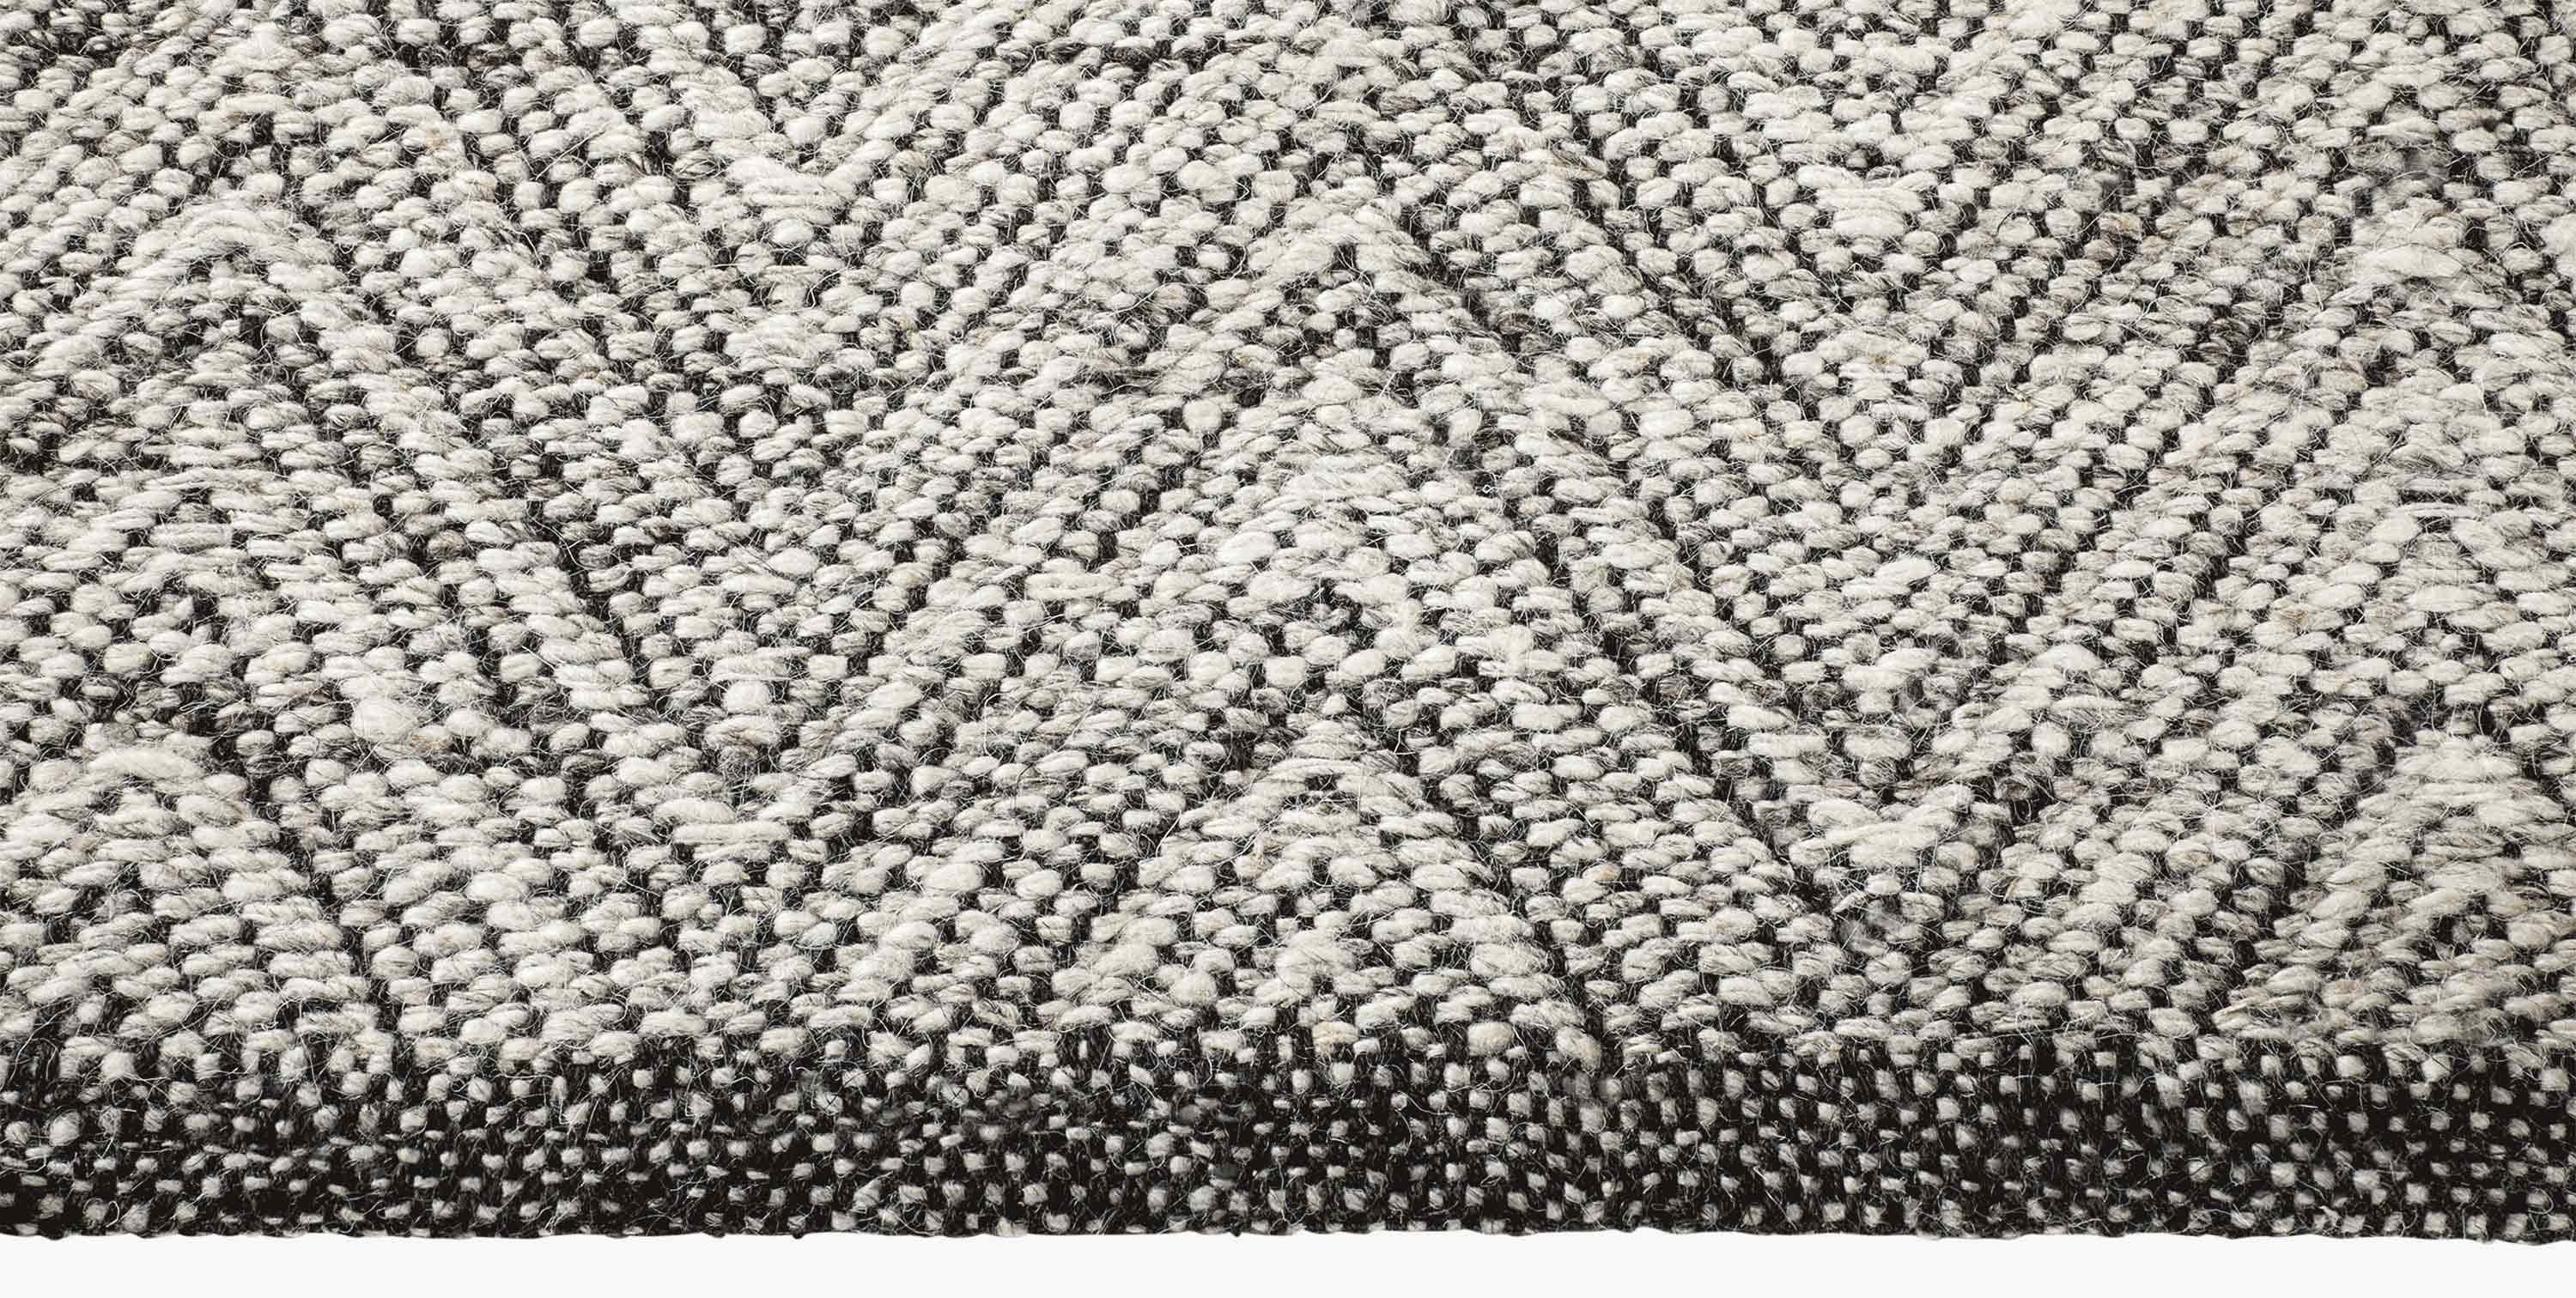 For Sale: Silver Ben Soleimani Ceyah Rug– Hand-woven Plush Textured Wool + Linen Charcoal 10'x14' 3